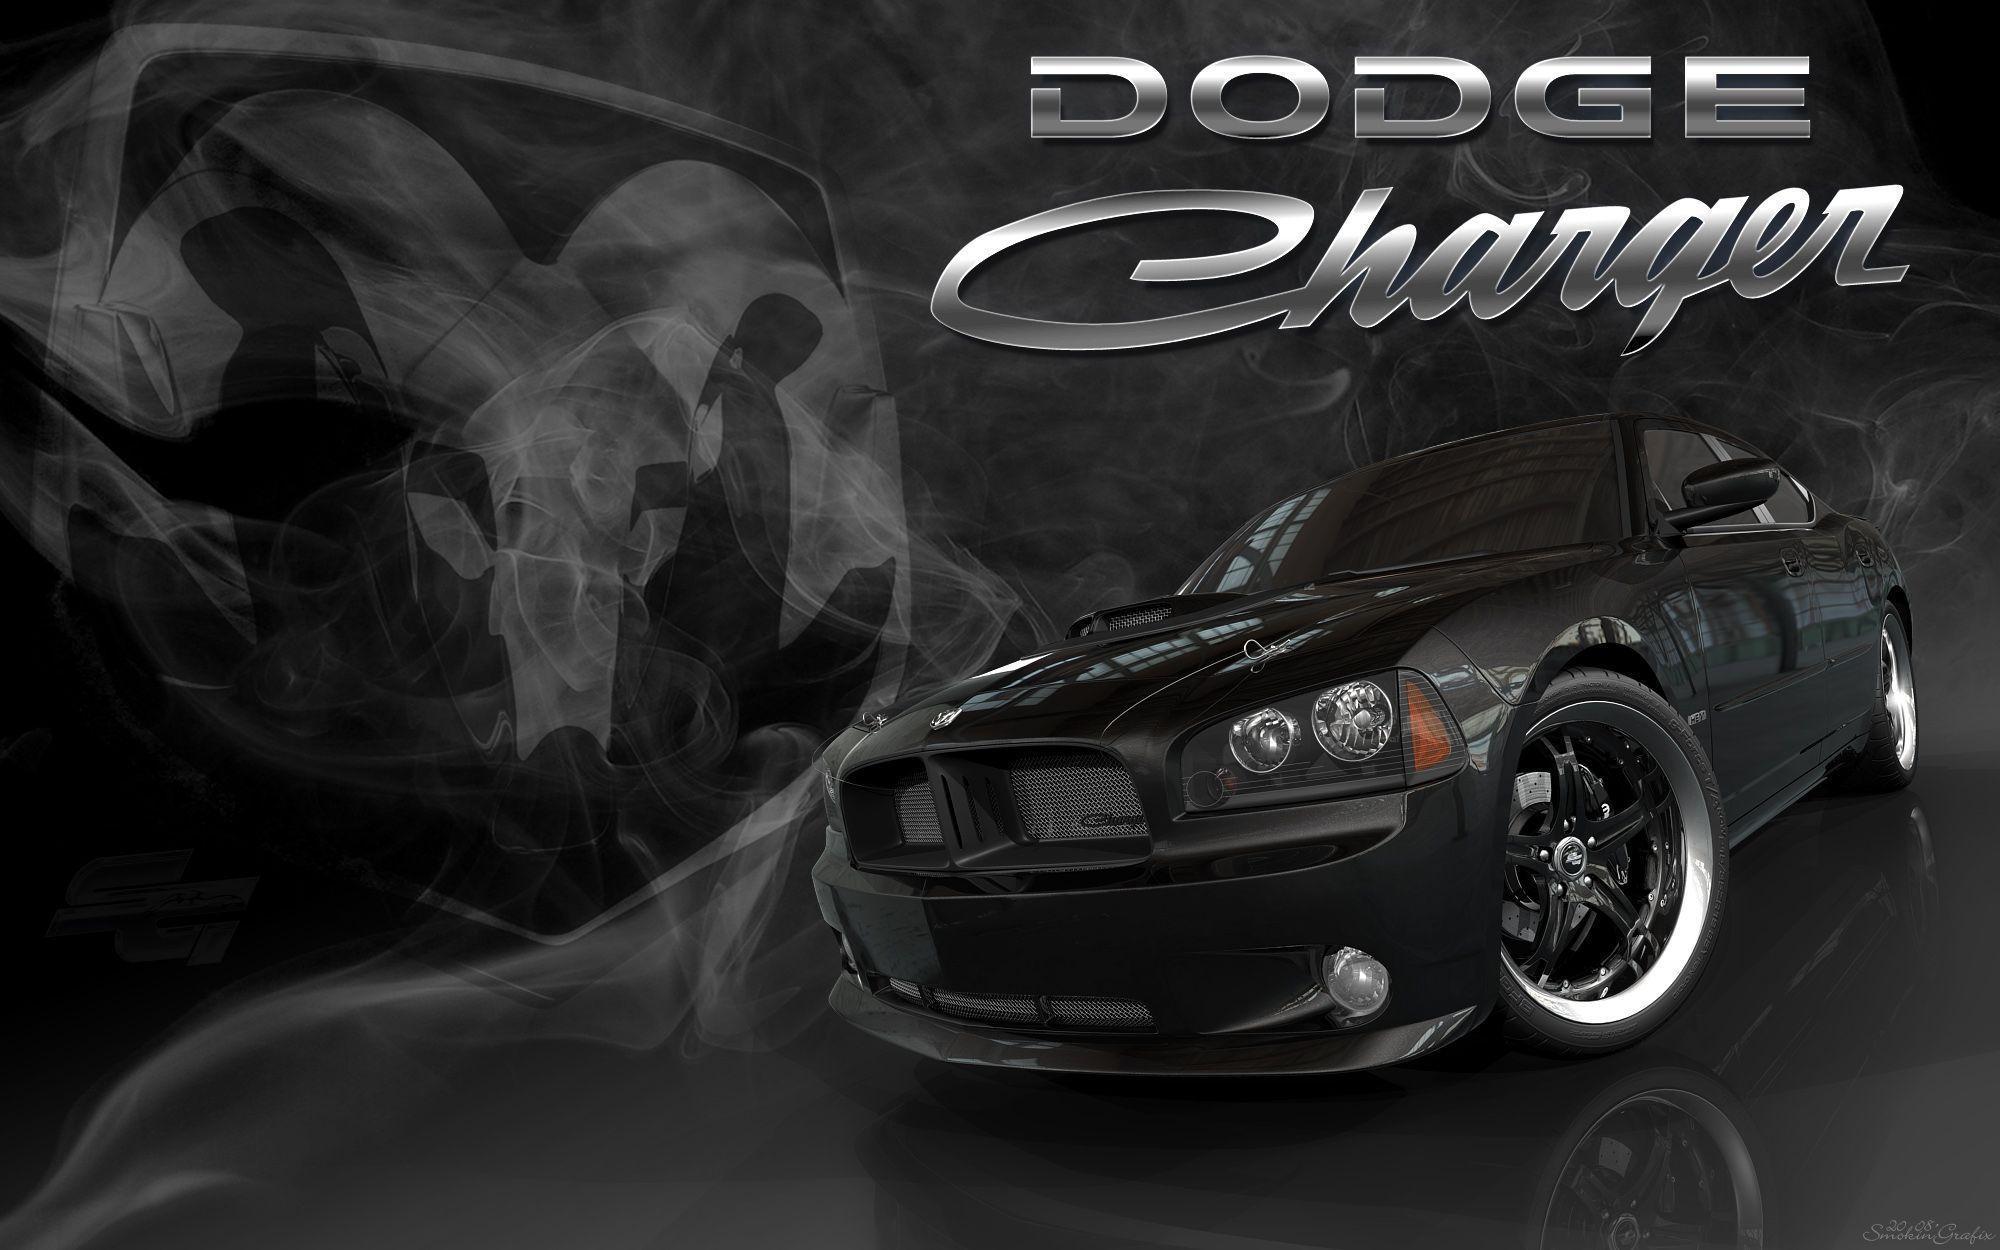 Dodge Wallpaper, Cool Image, Top Dodge Cars Wallpaper